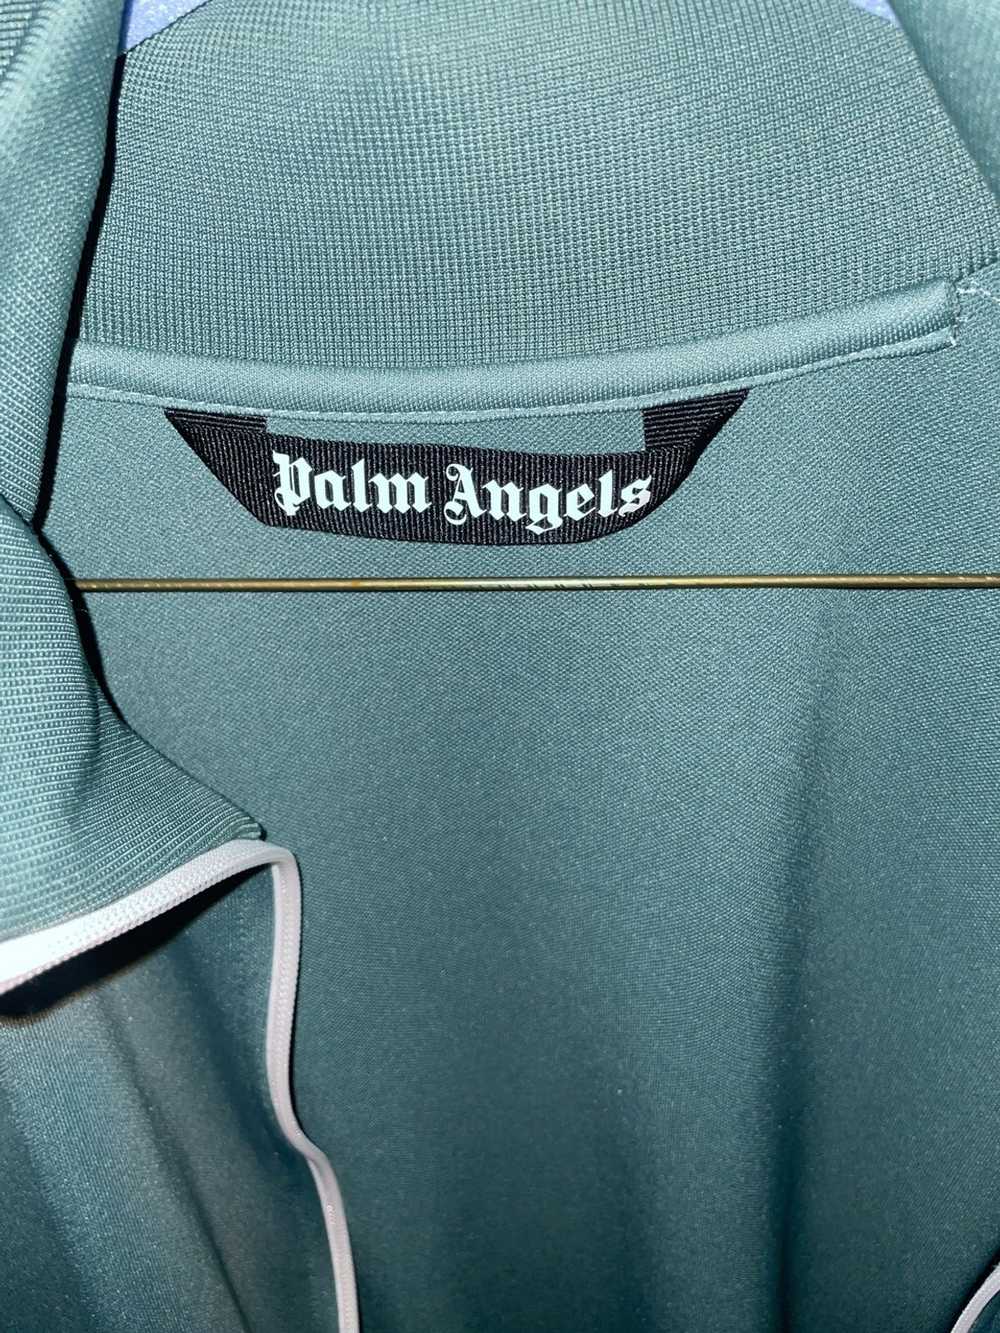 Palm Angels Palm Angels Track Jacket - image 4